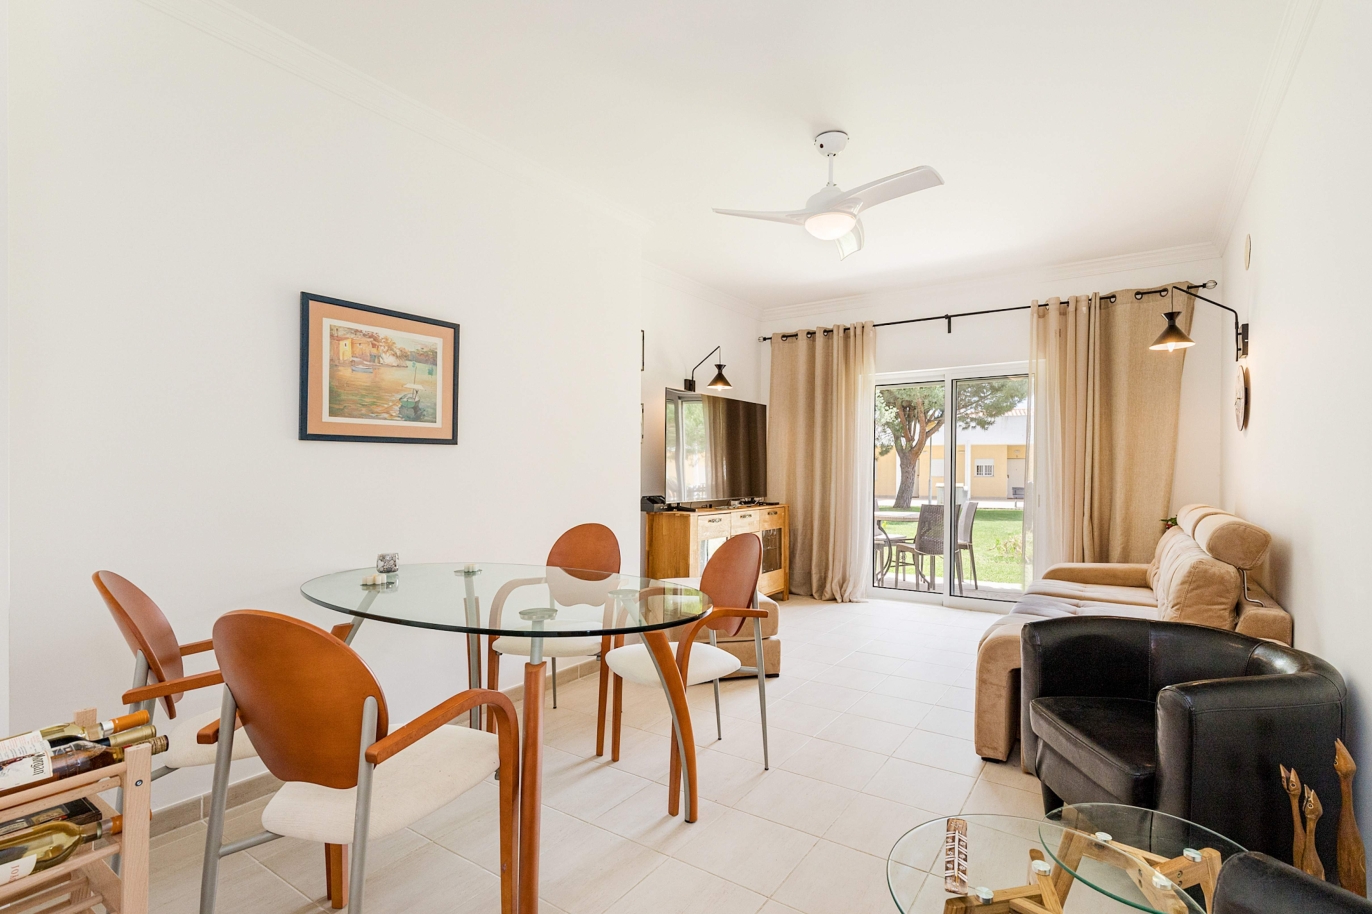 Apartamento T2, em condominio, para venda, Albufeira, Algarve_201444